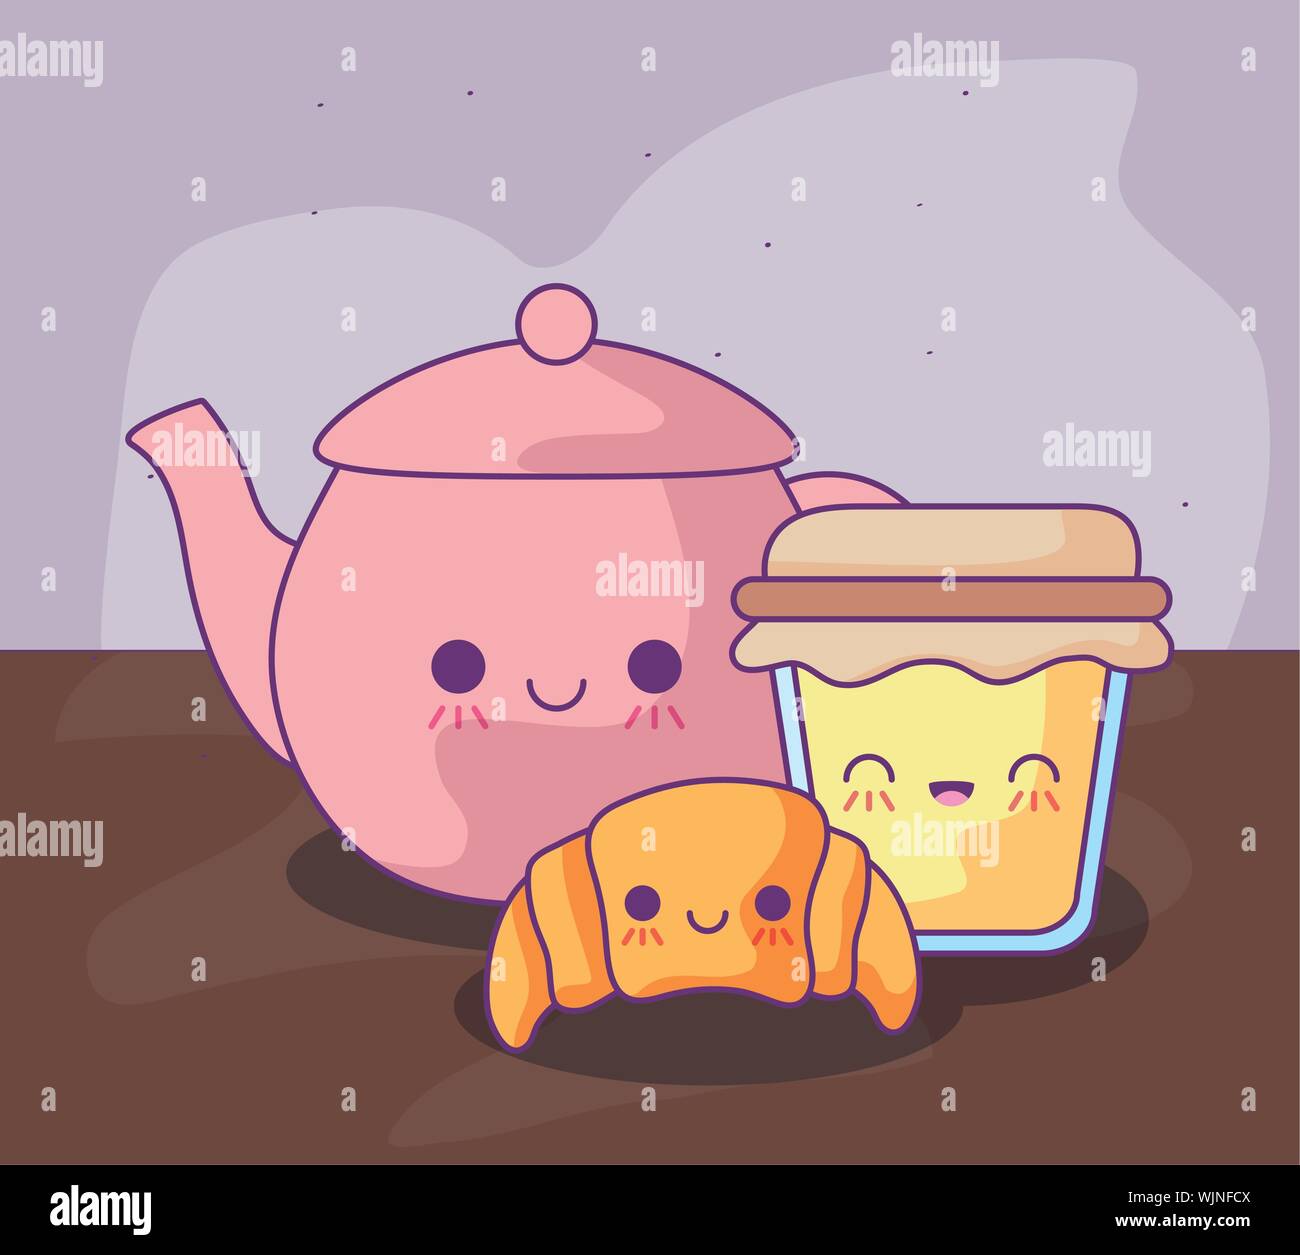 https://c8.alamy.com/comp/WJNFCX/cute-teapot-with-delicious-food-kawaii-style-vector-illustration-design-WJNFCX.jpg